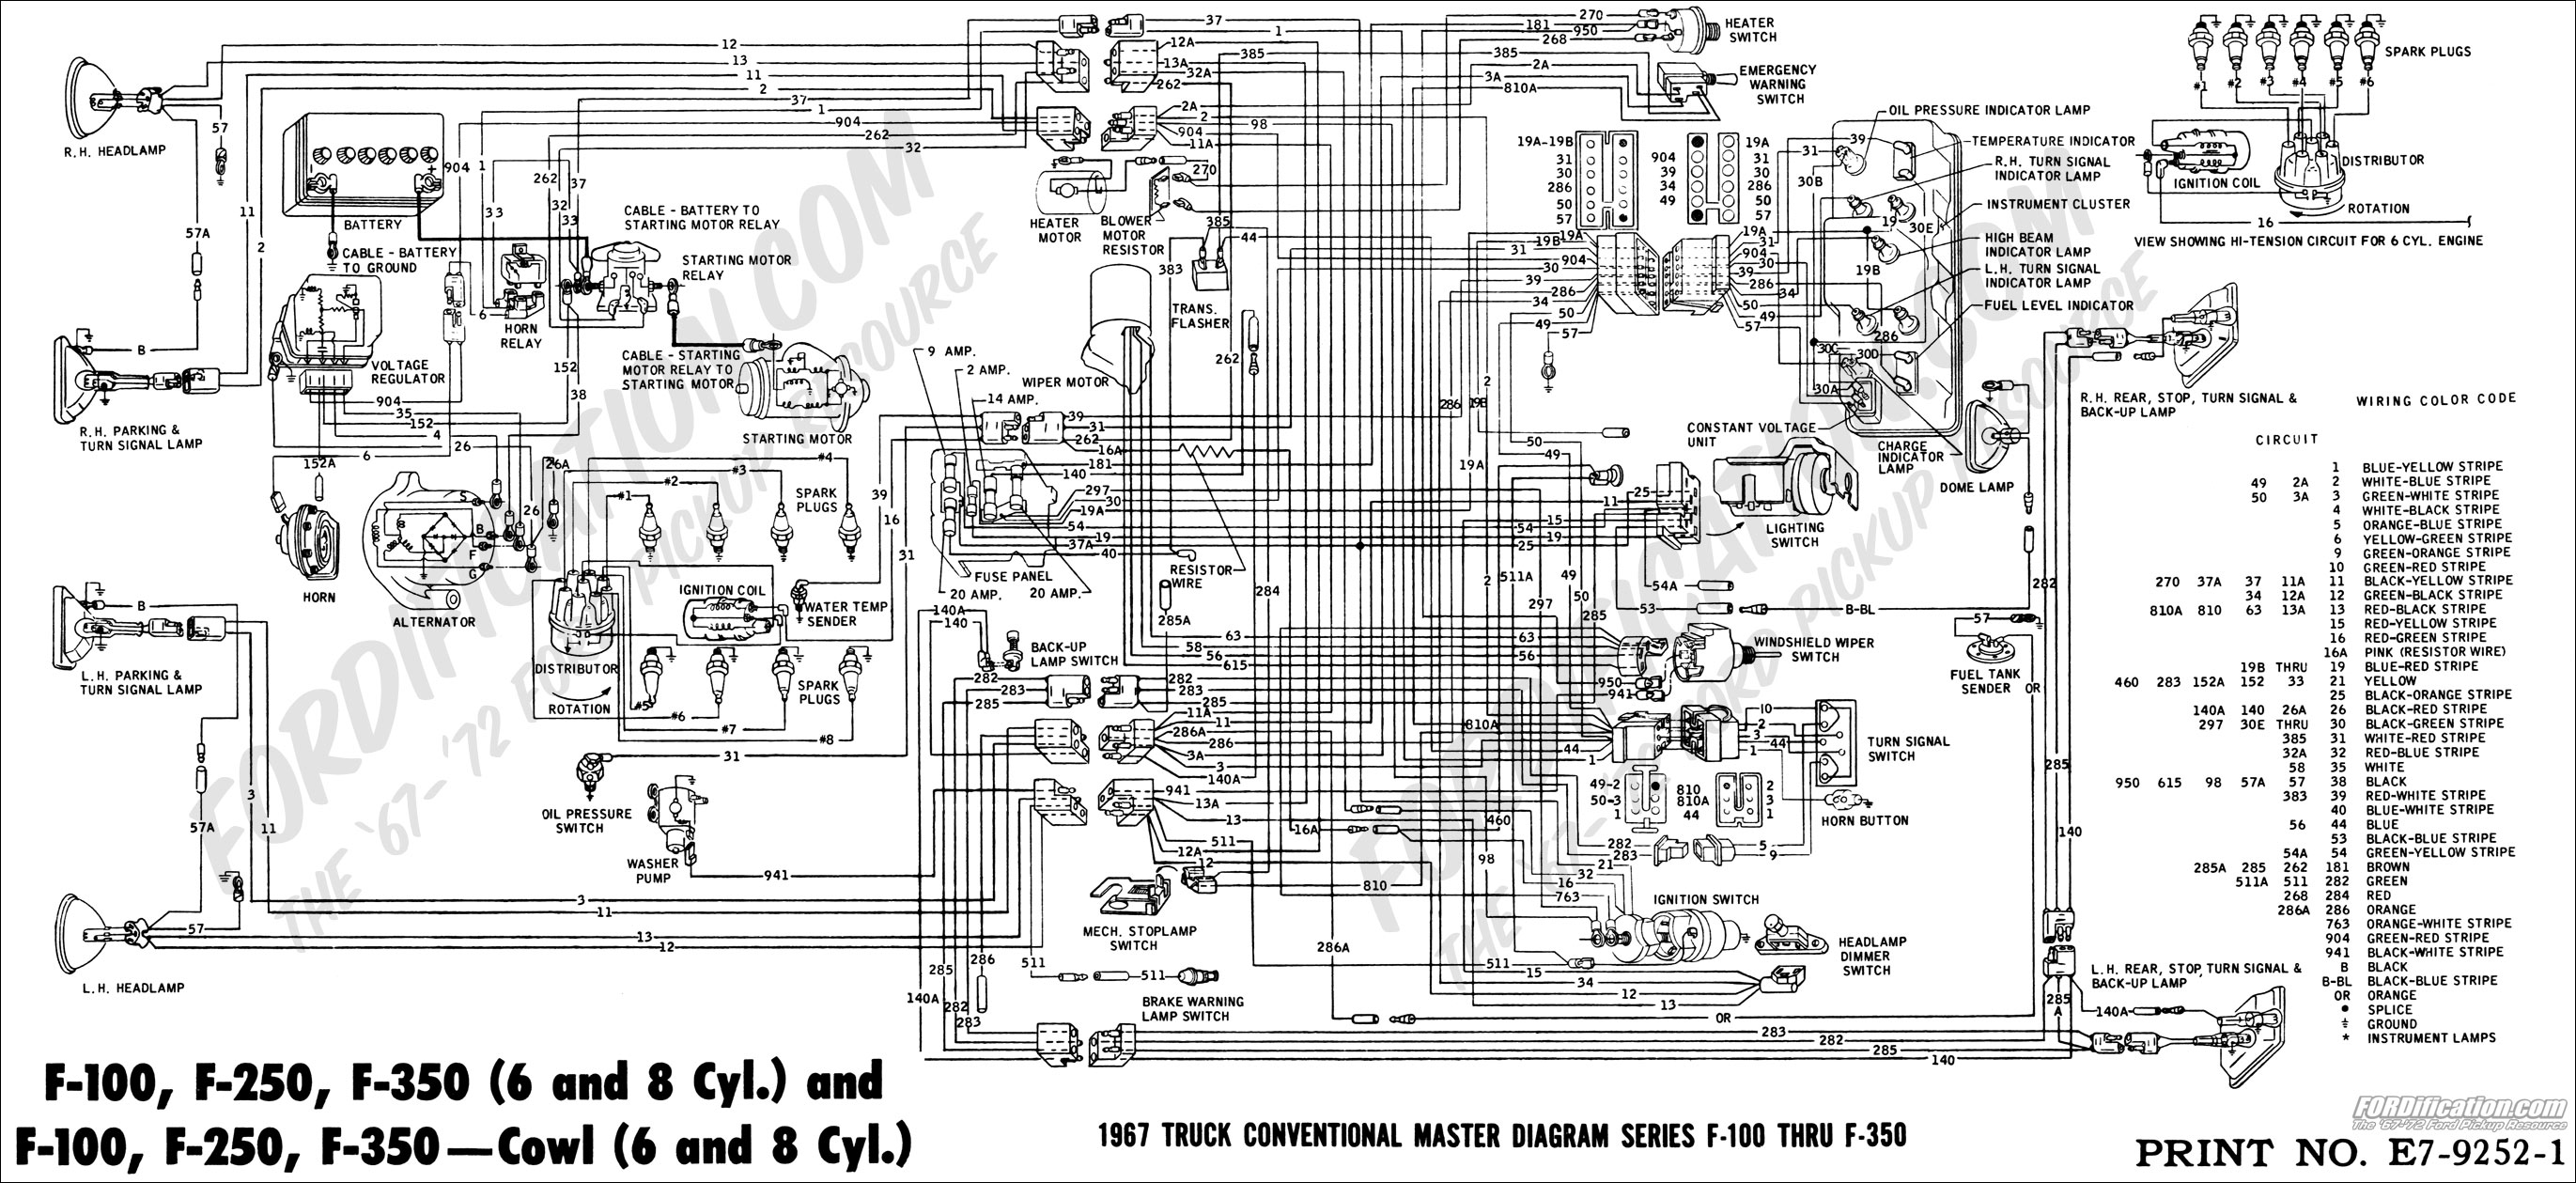 2004 Ford F150 Wiring Diagram Download from schematron.org